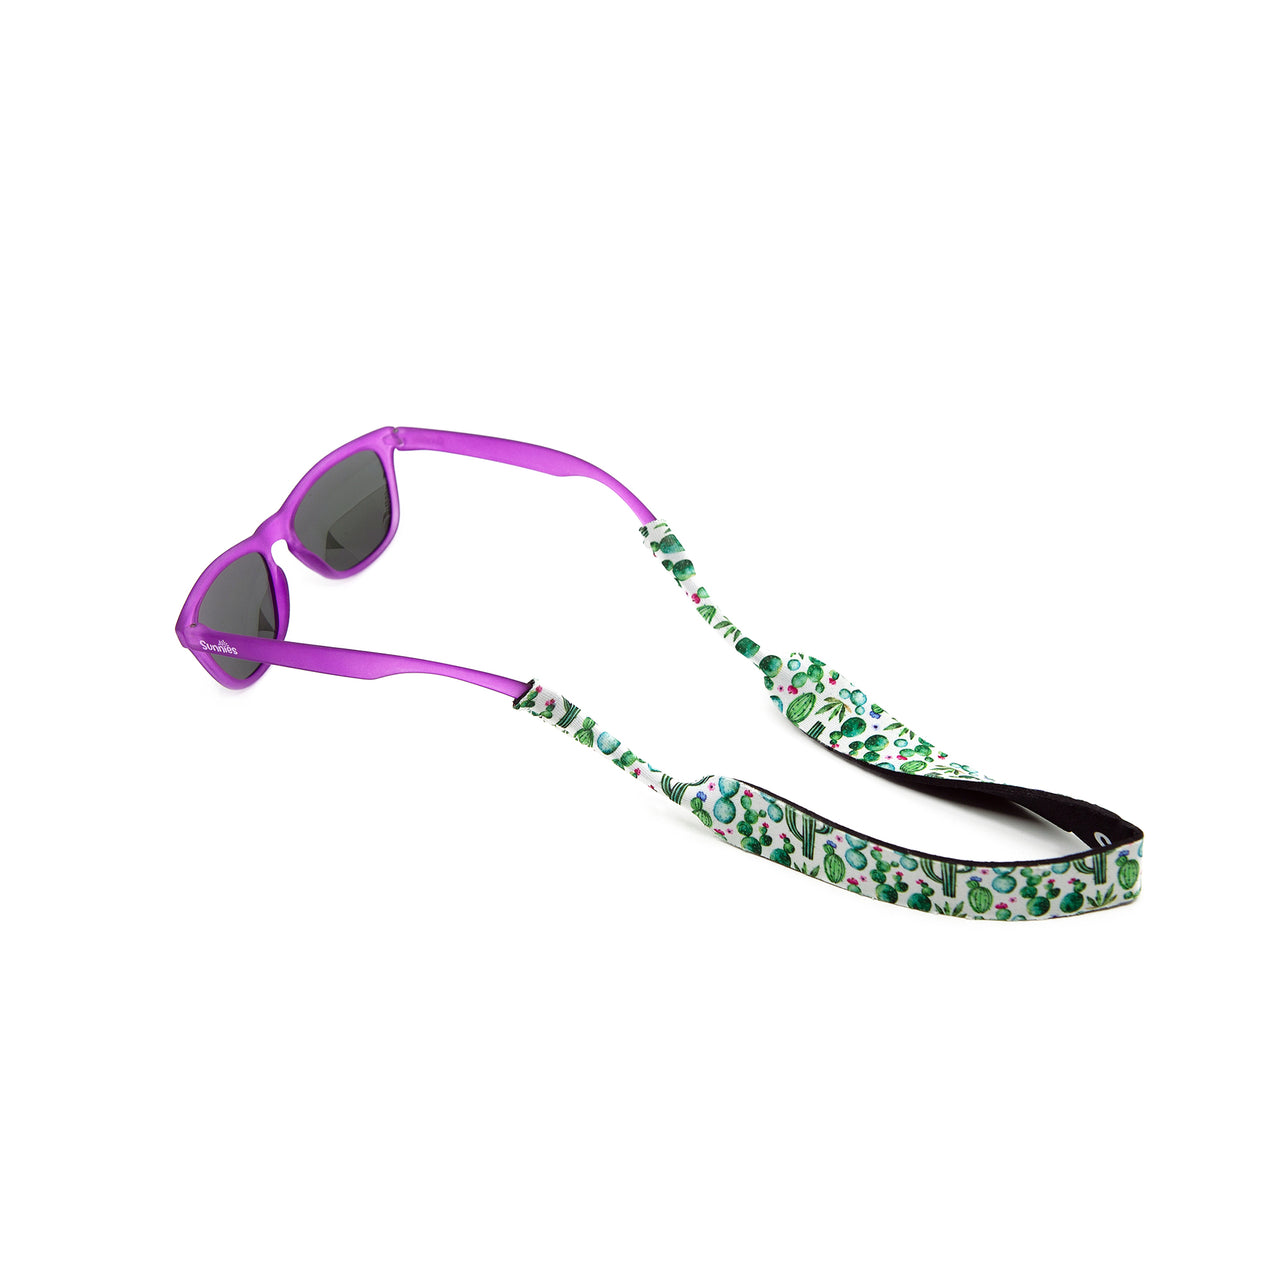 Kids sunglass leash in cactus print on a pair of kids sunglasses